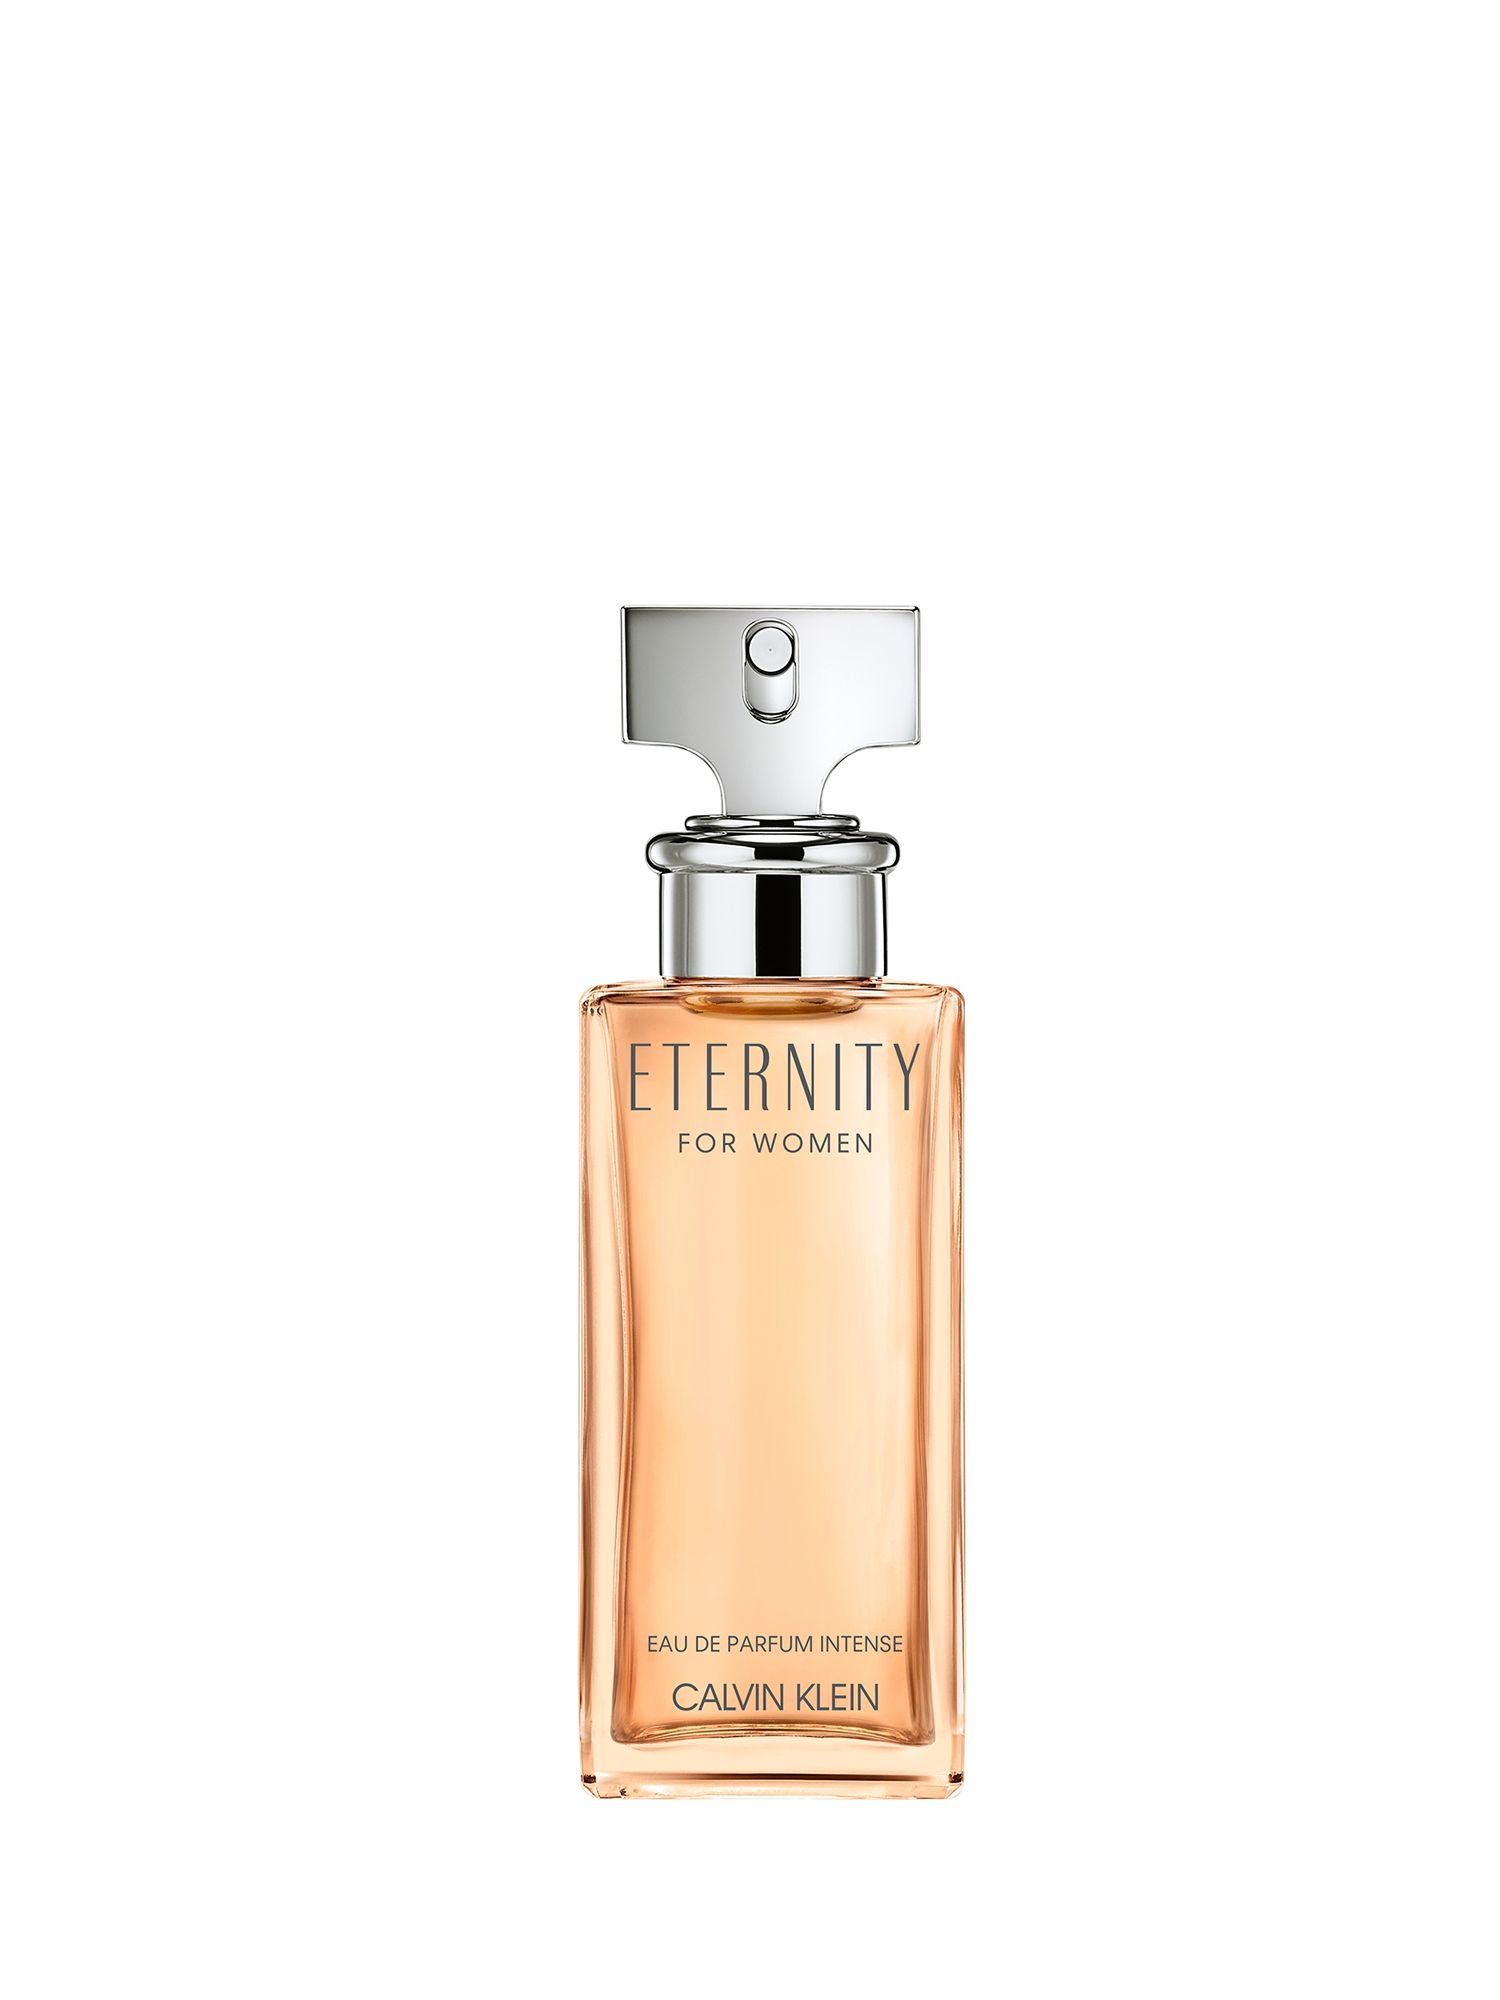 Calvin Klein Eternity For Women Eau de Parfum Intense, 50ml 1